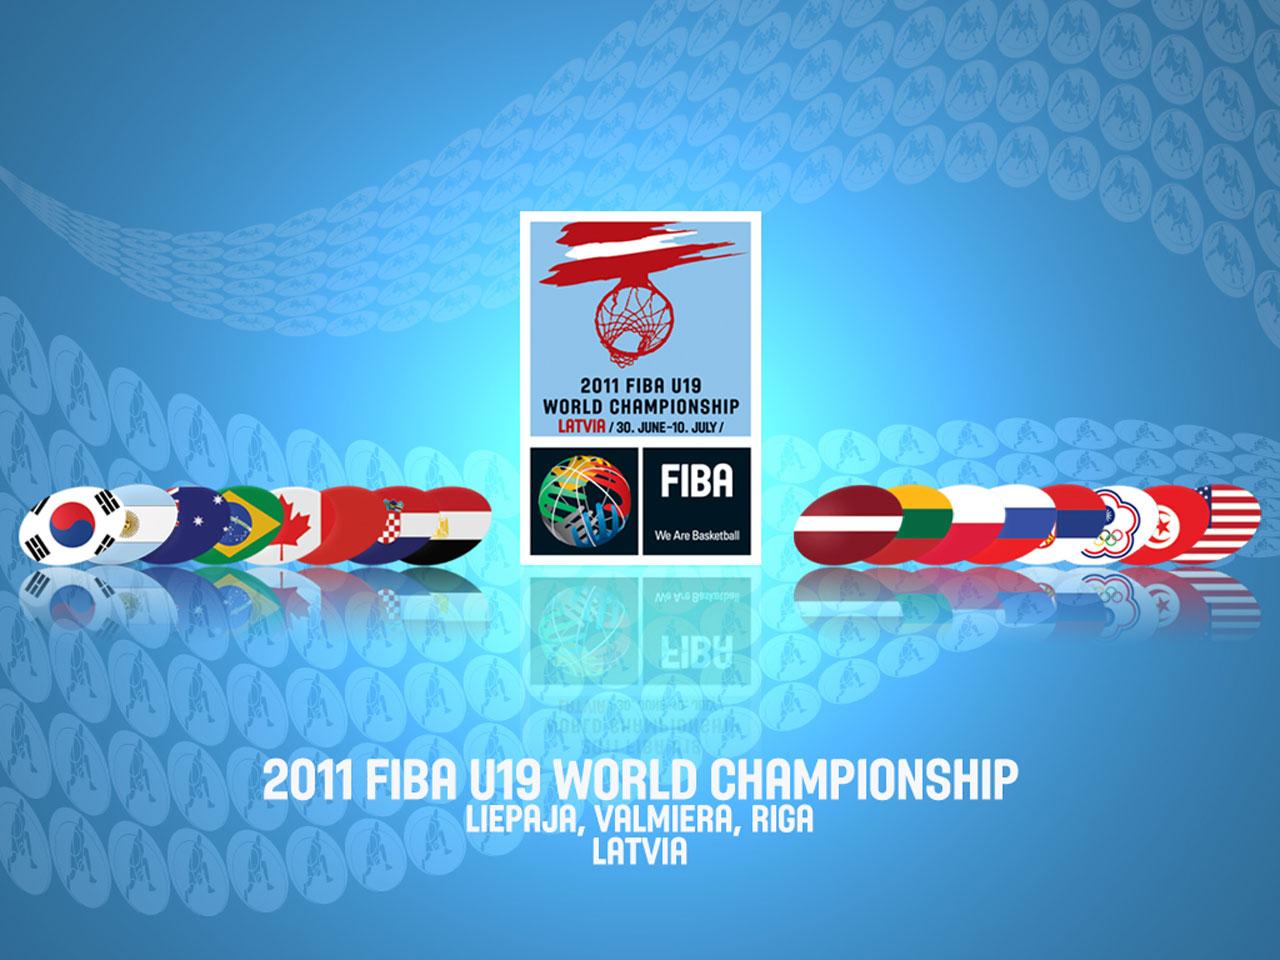 U19 FIBA World Championship Wallpaper. Basketball Wallpaper